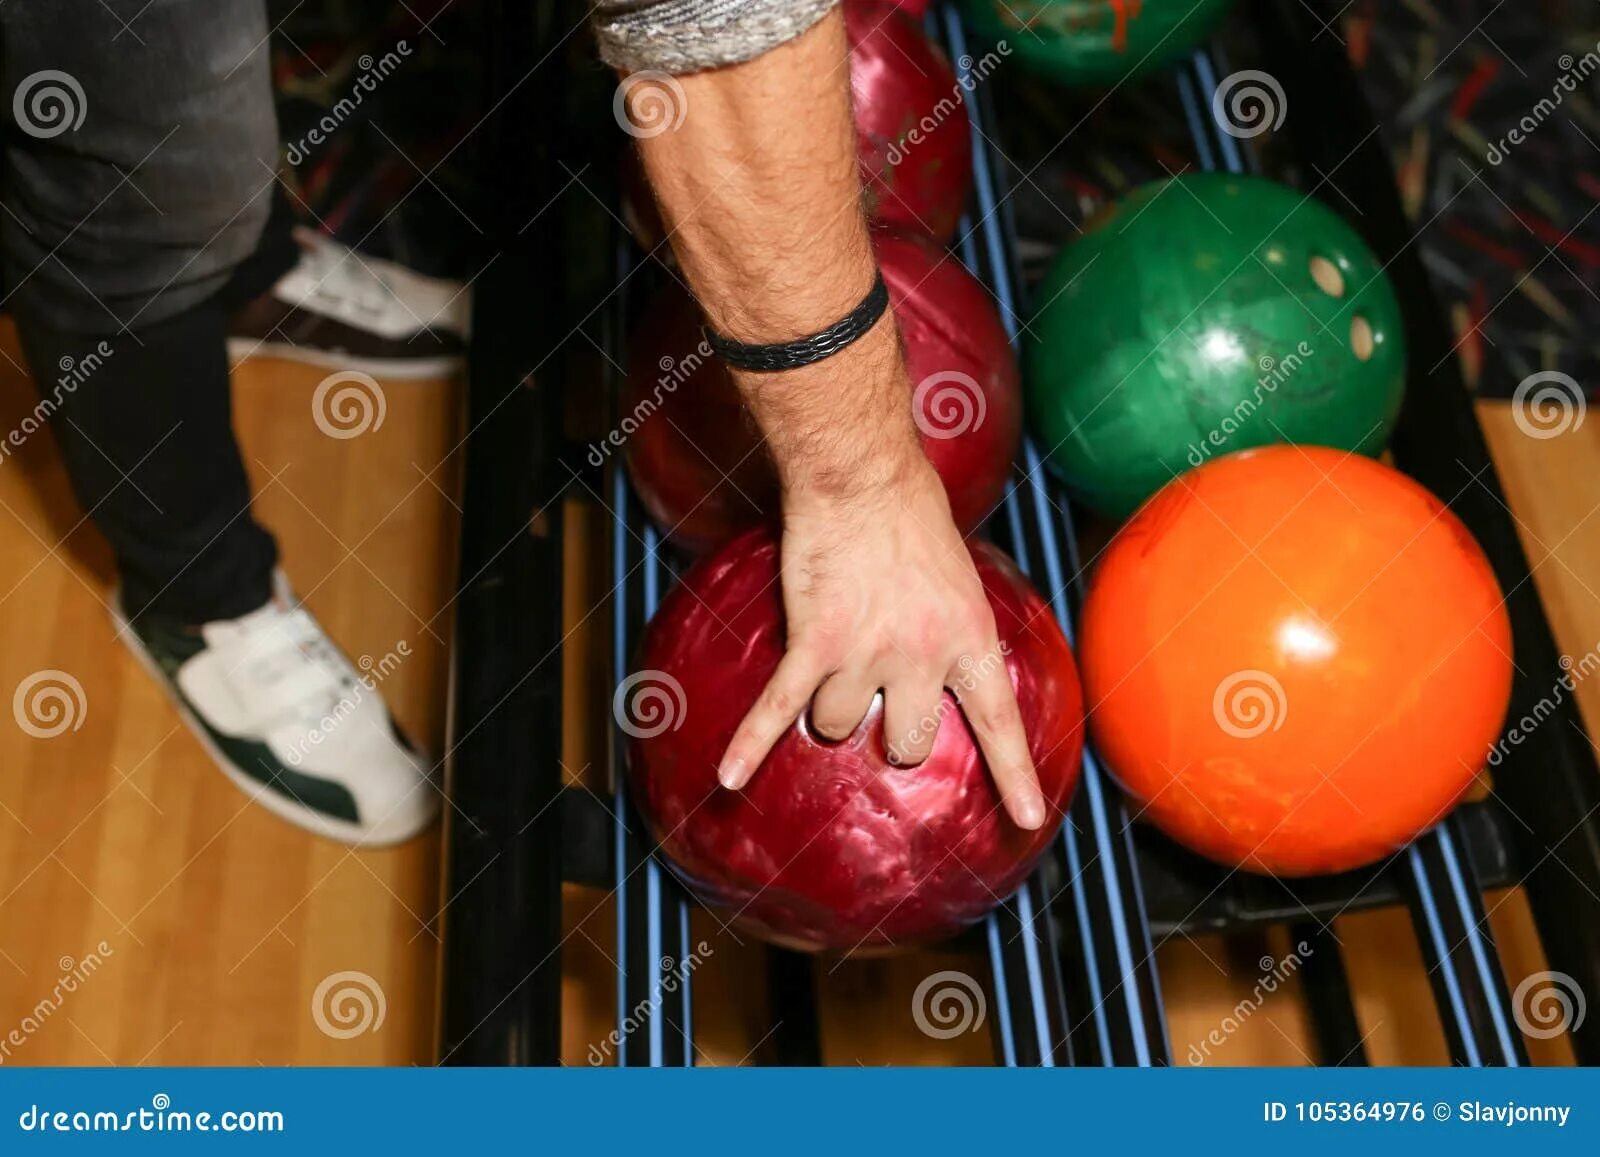 Мяч для боулинга. Шар от боулинга в руке. Рука в шаре для боулинга. Цвет мячей в боулинге.